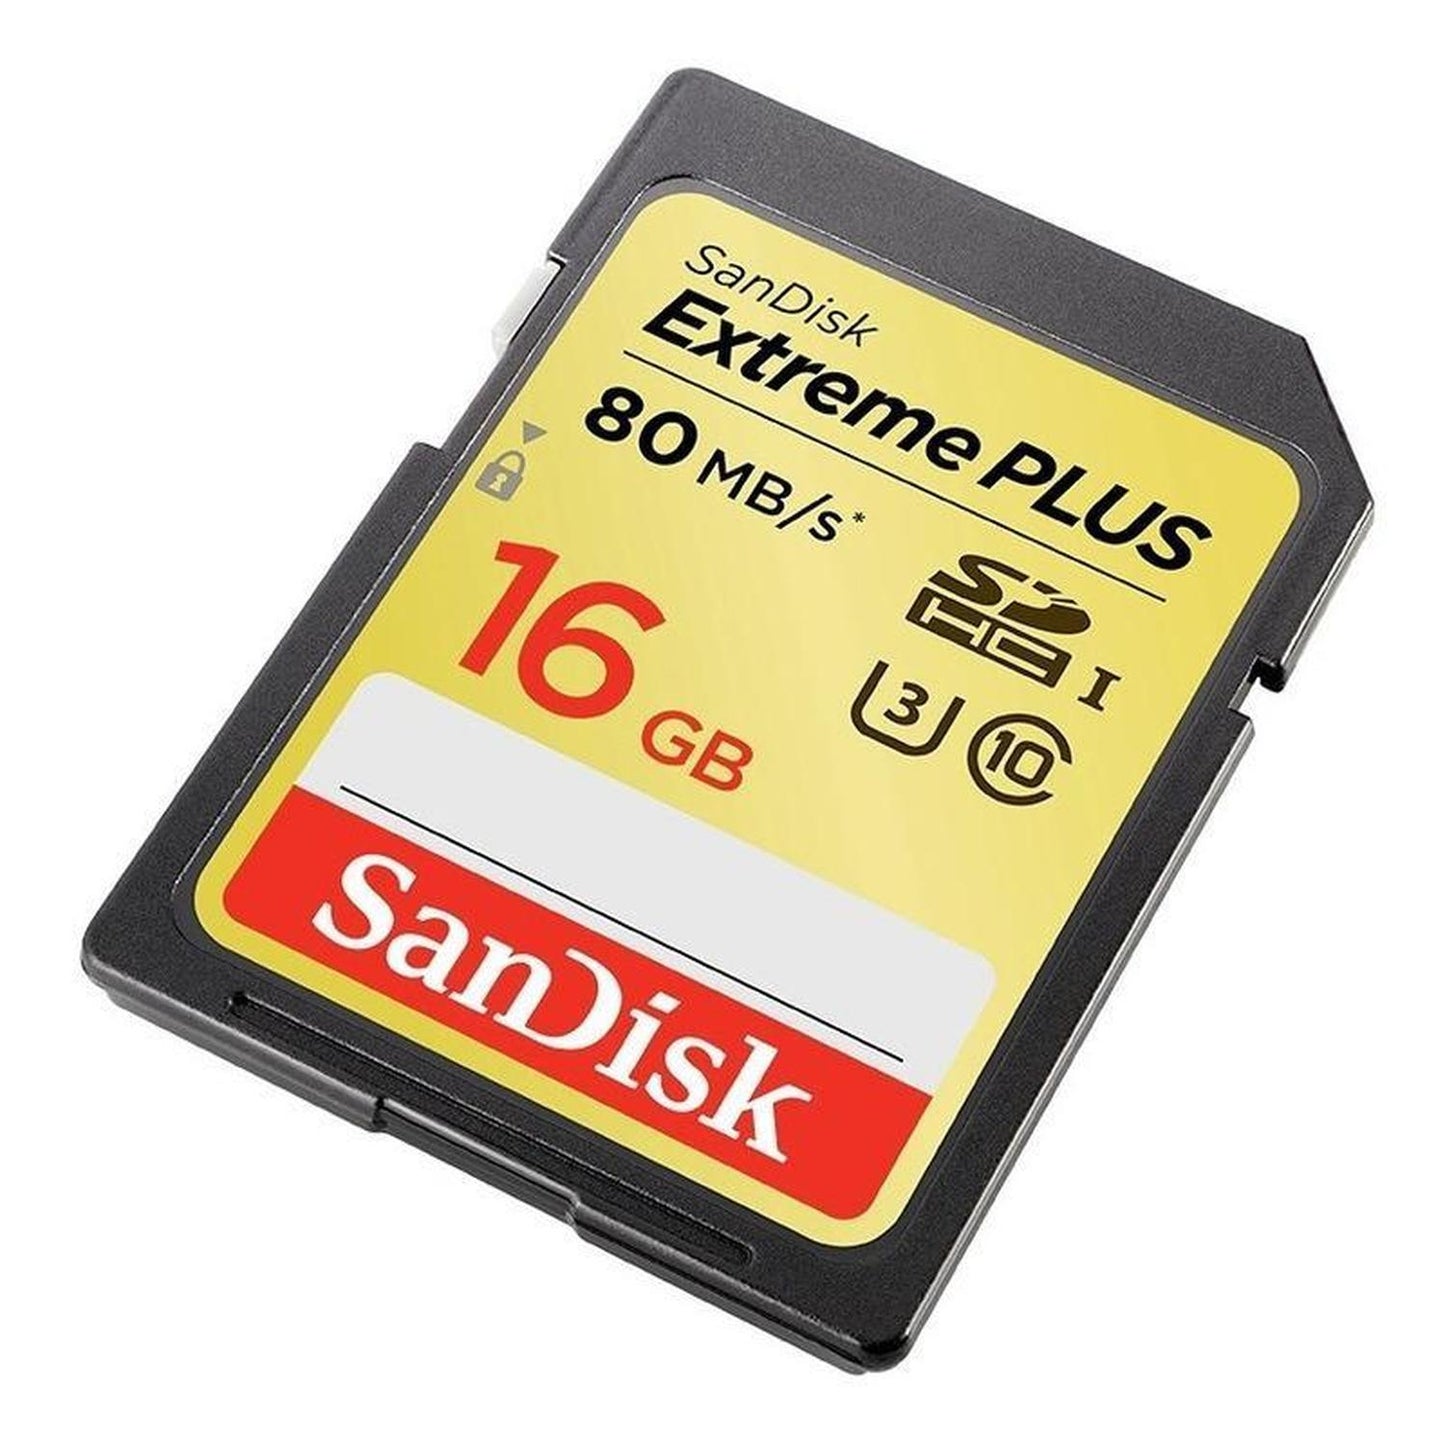 Memoria Sd Sandisk 16gb Extreme Plus Sdsdxs-016g-x46